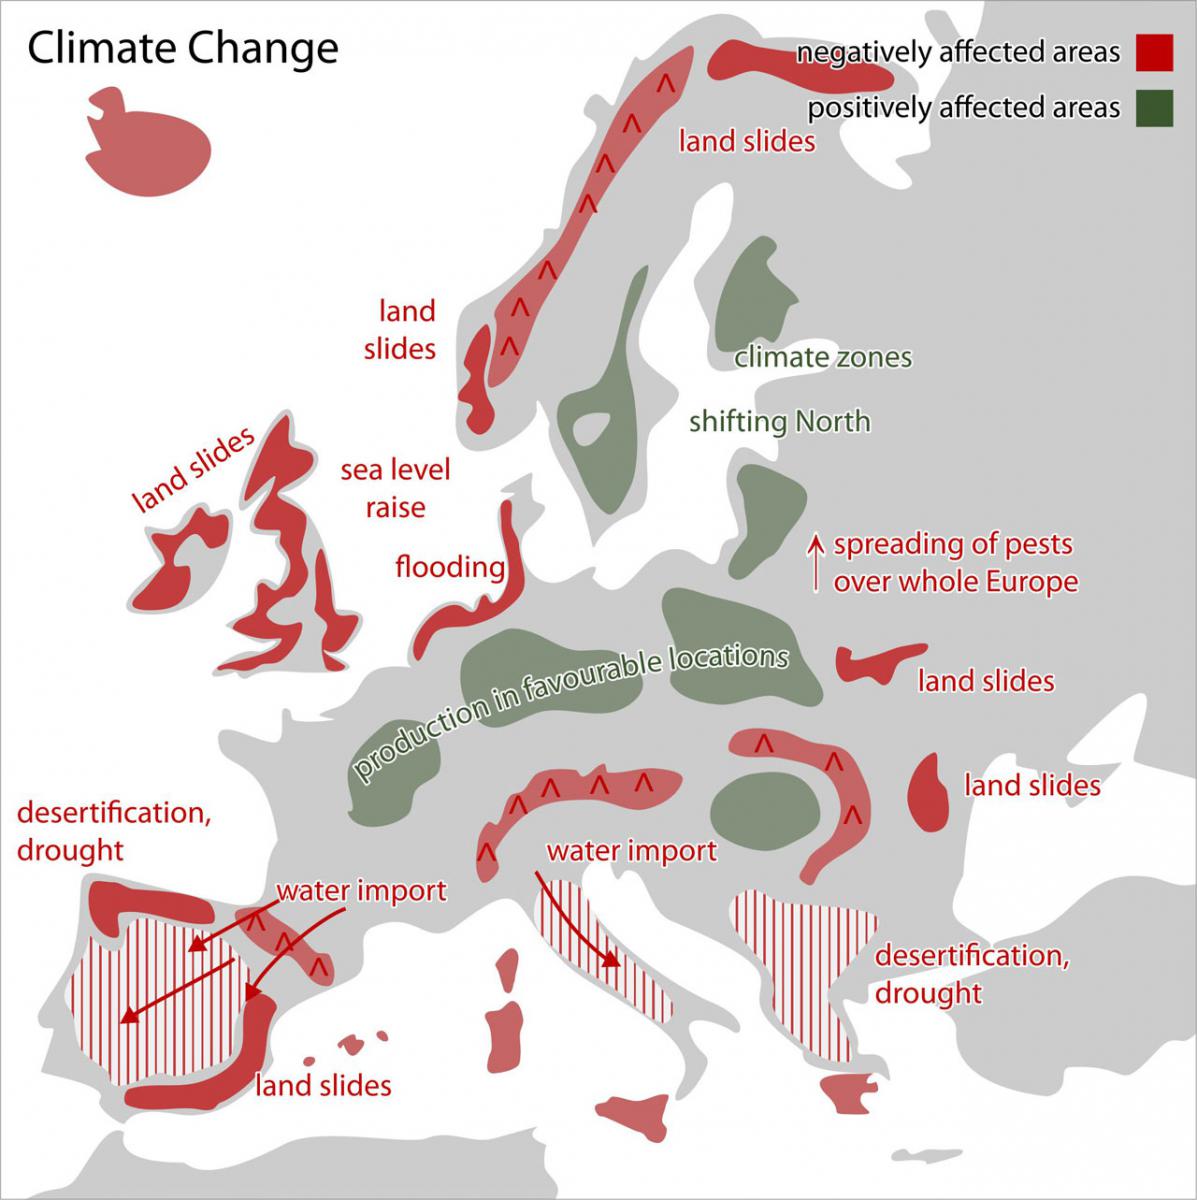 Ergebnis des Brainstormings zum Szenario "Klimawandel" © ÖIR GmbH 